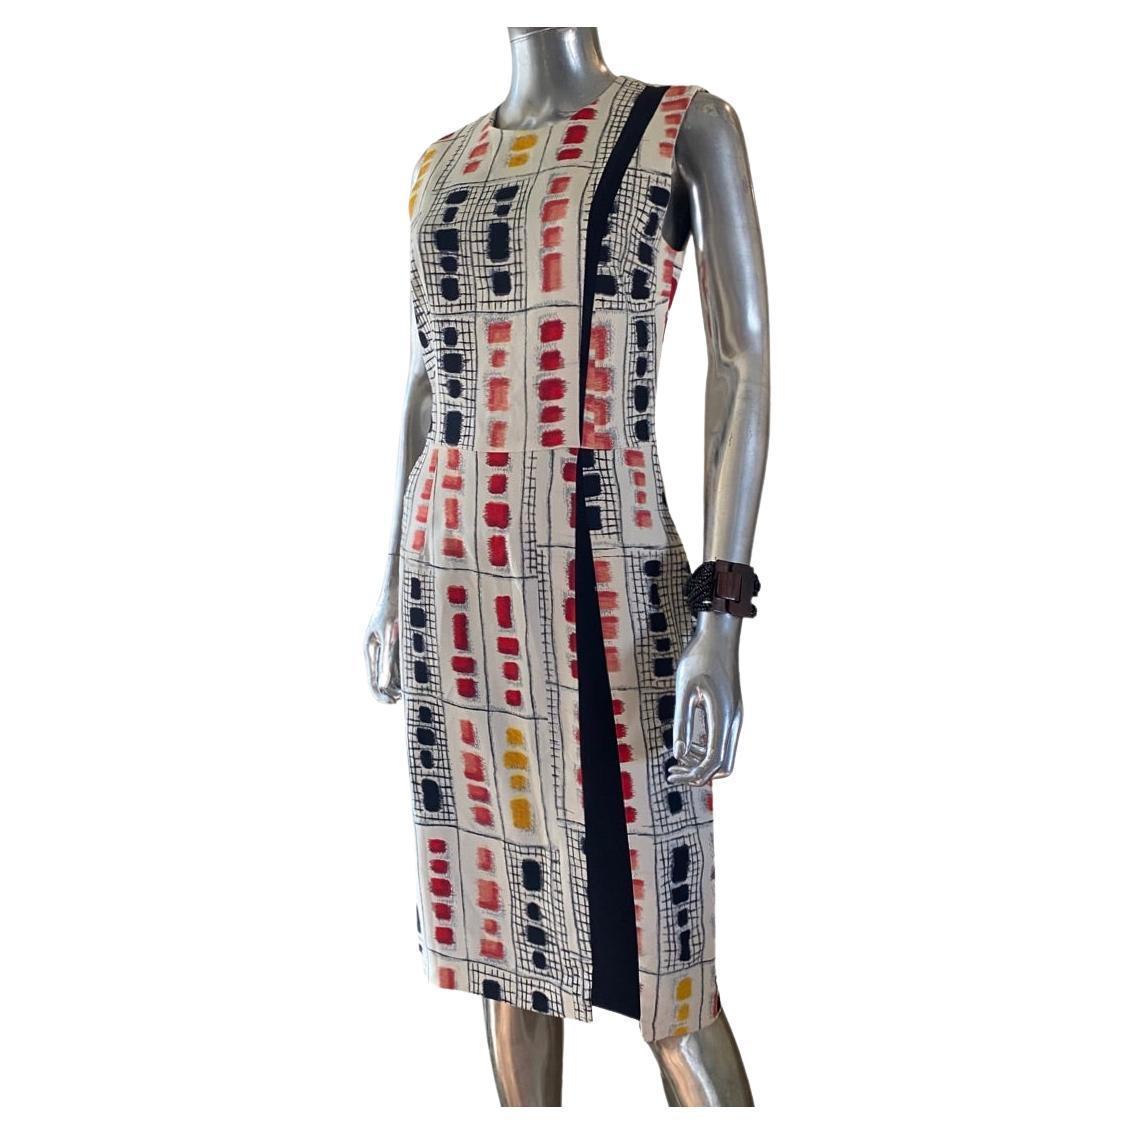 Etro Italy Modern Art Abstract Print Sleeveless Sheath Dress Size 8